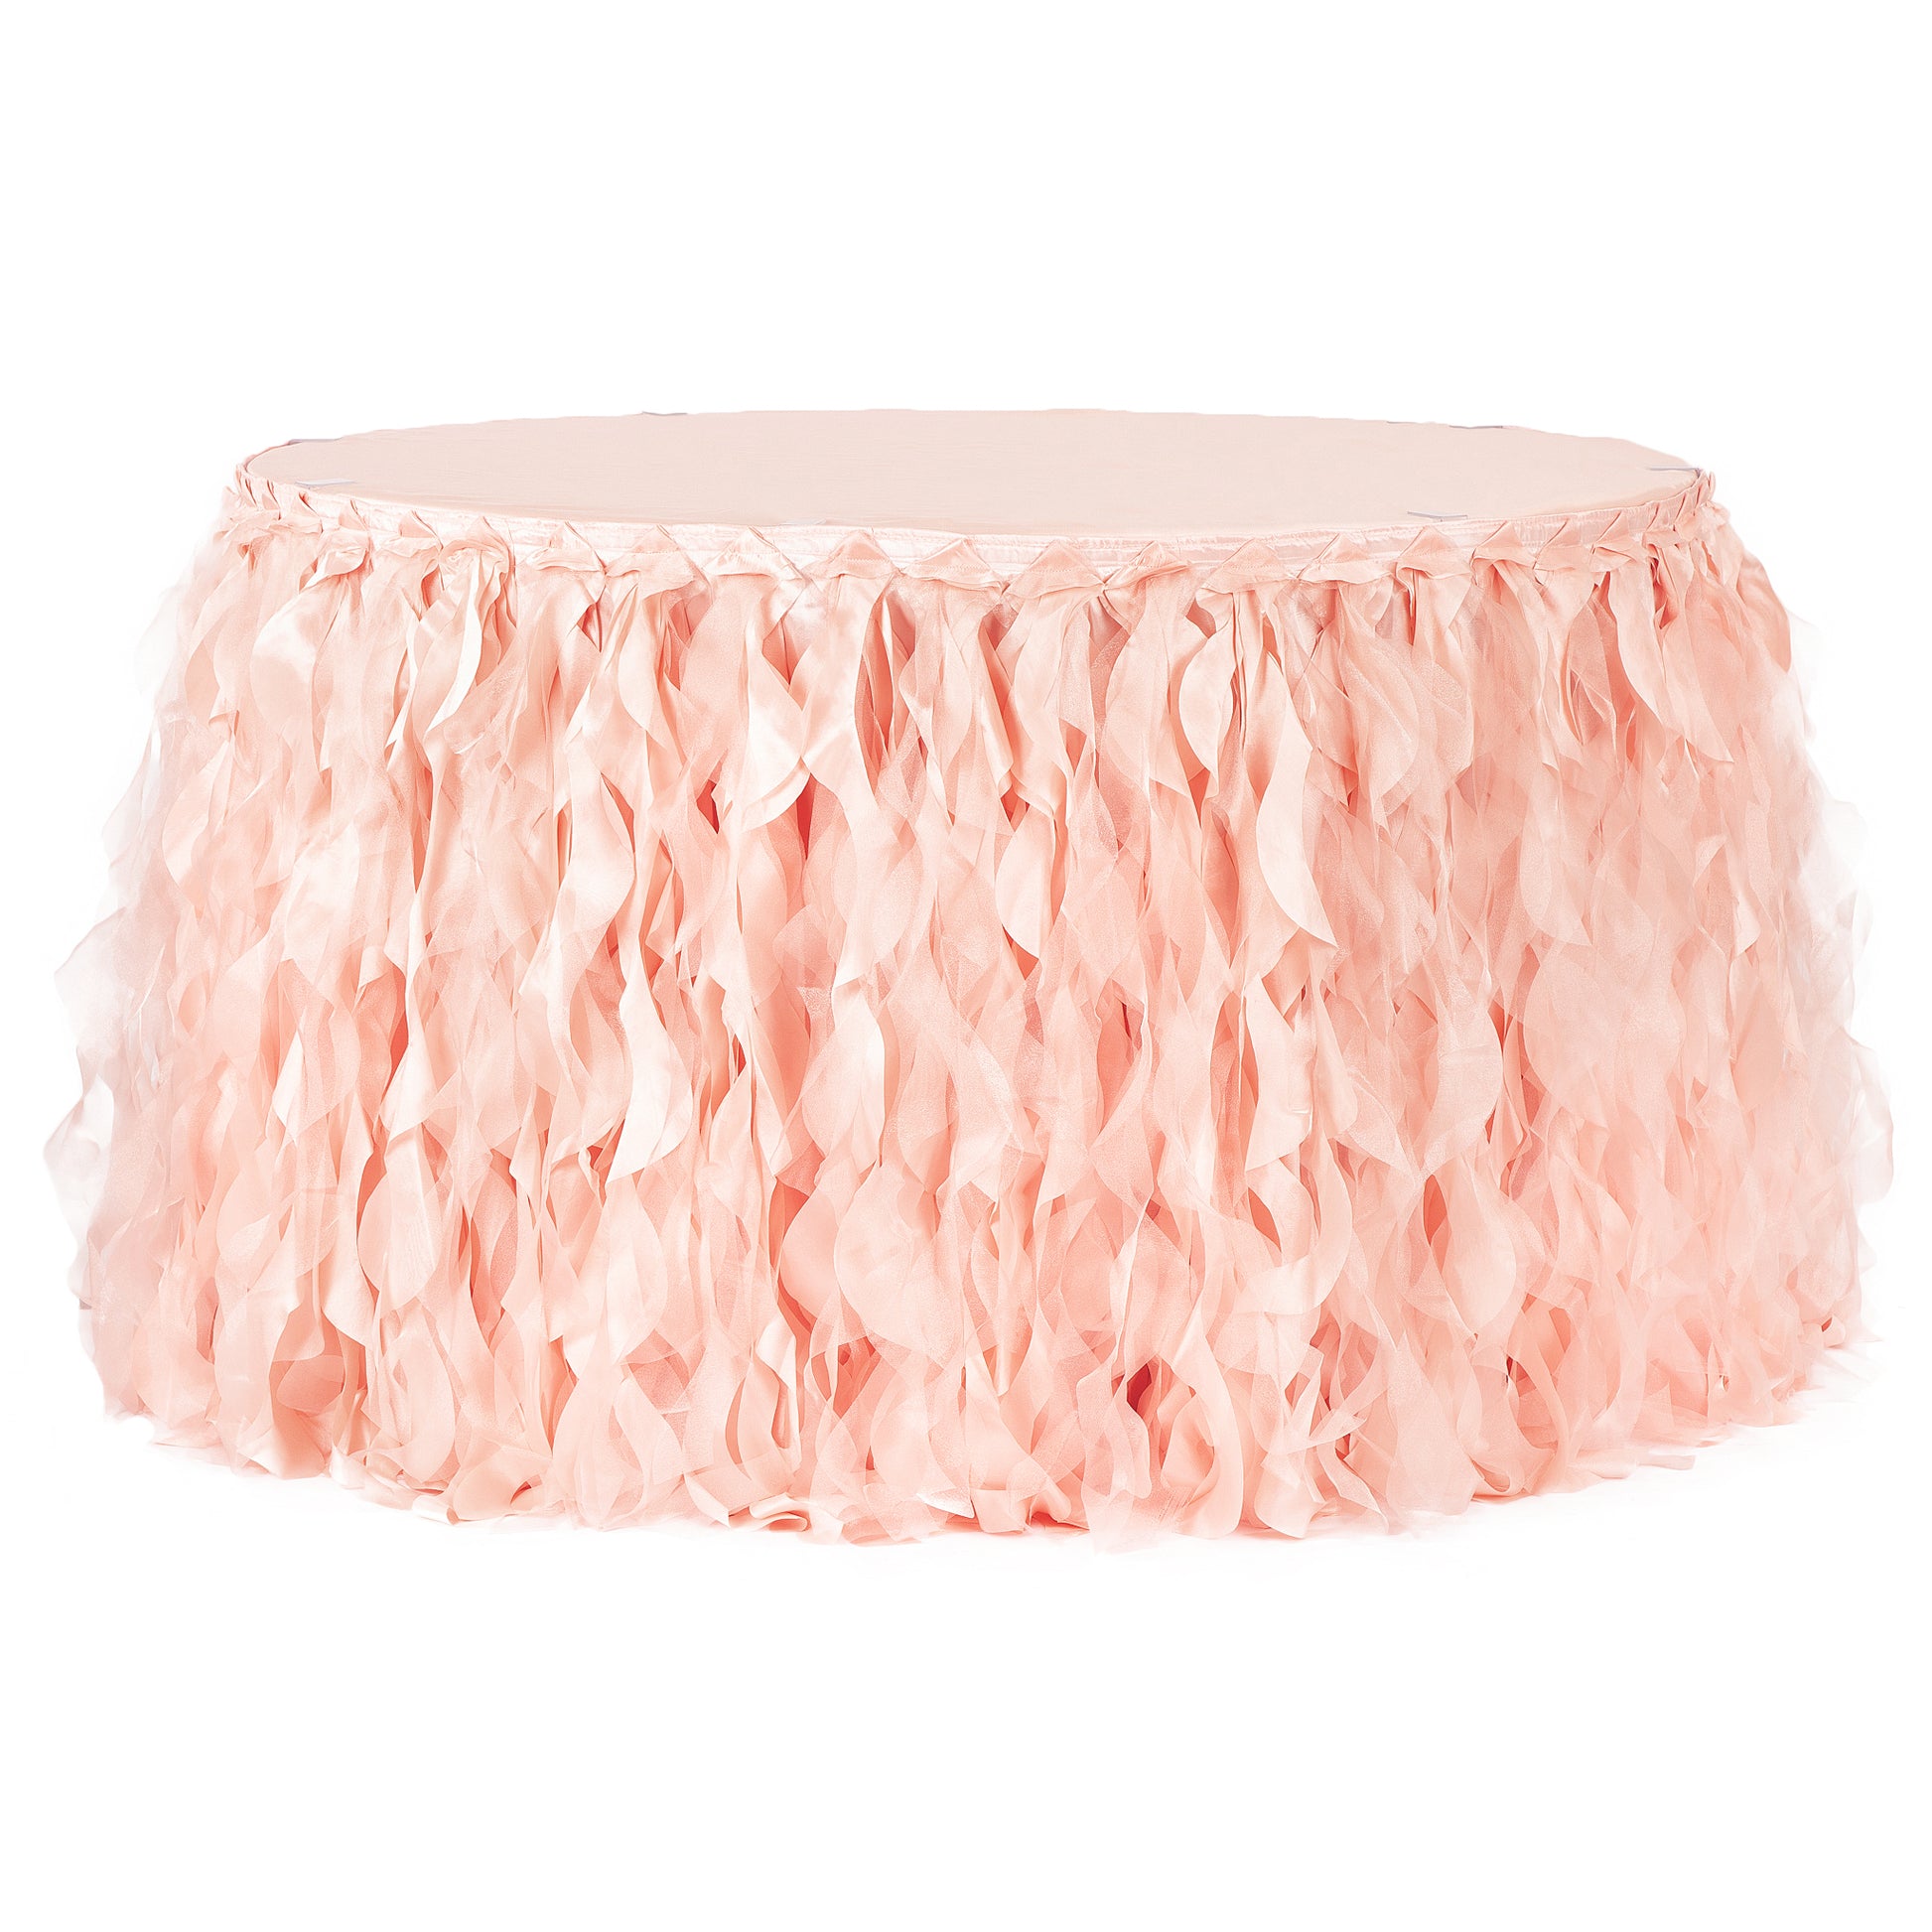 Curly Willow 14ft Table Skirt - Blush/Rose Gold - CV Linens